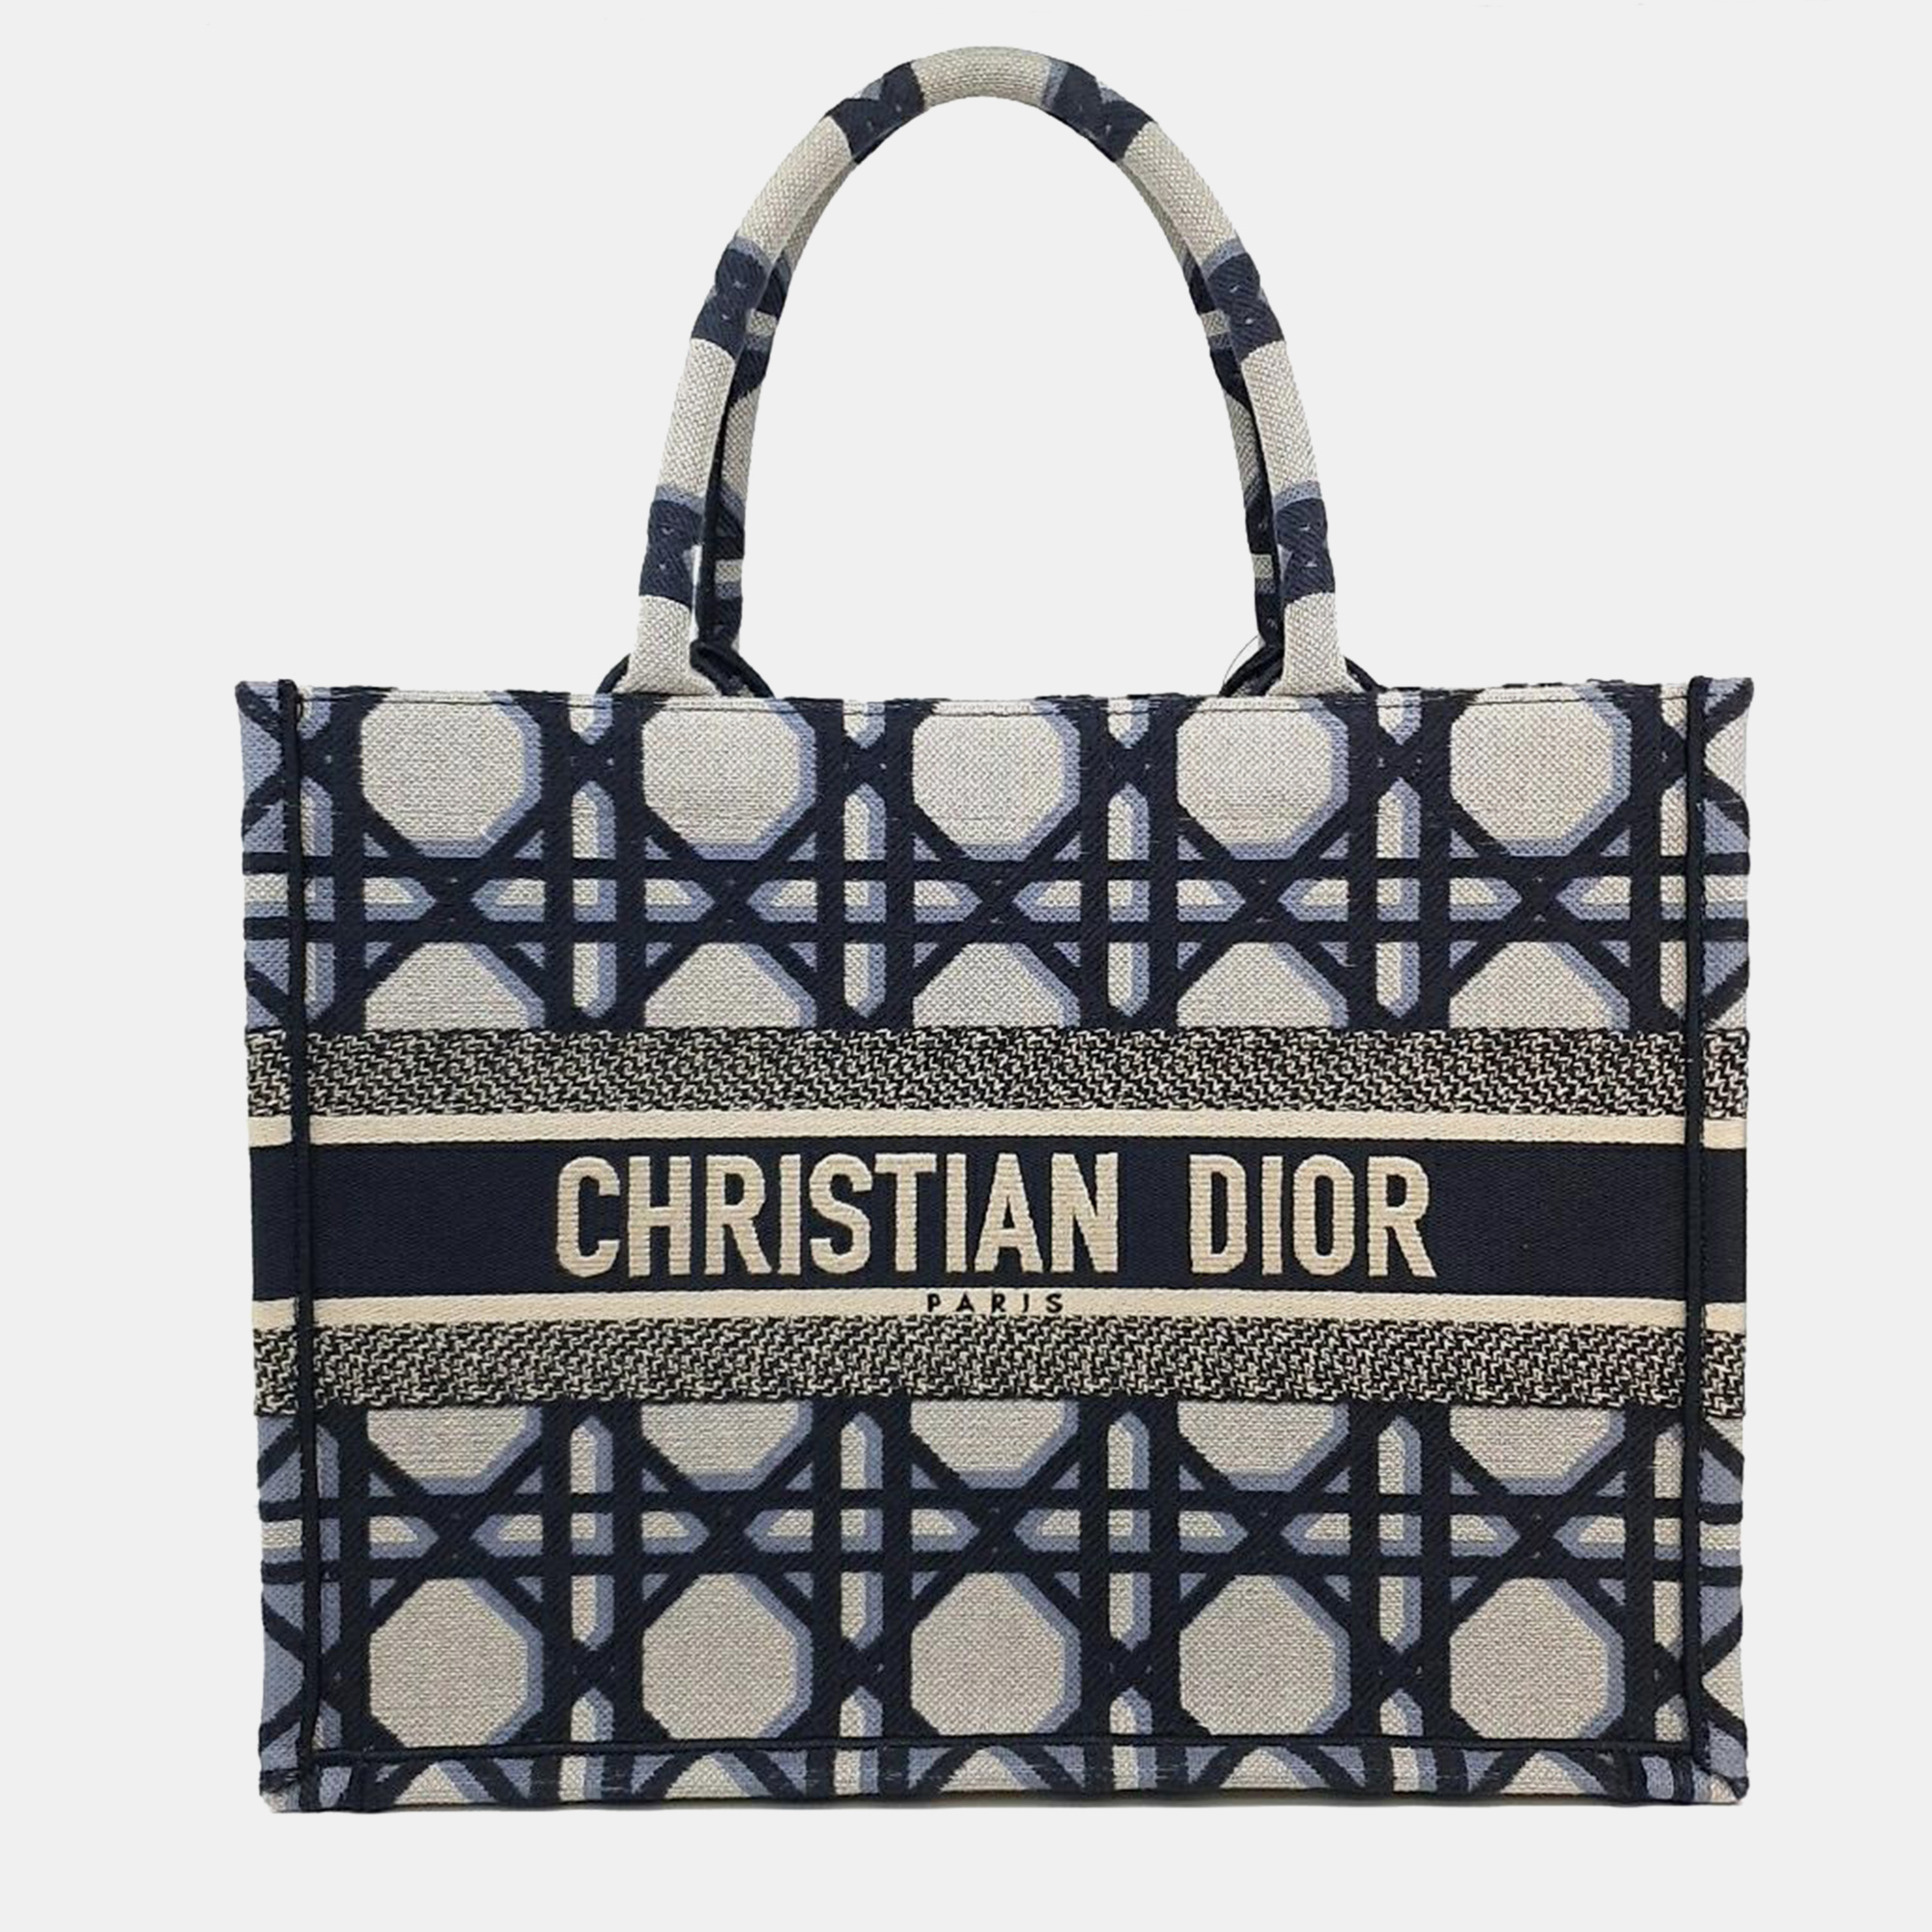 Christian dior book tote handbag 36 m1296